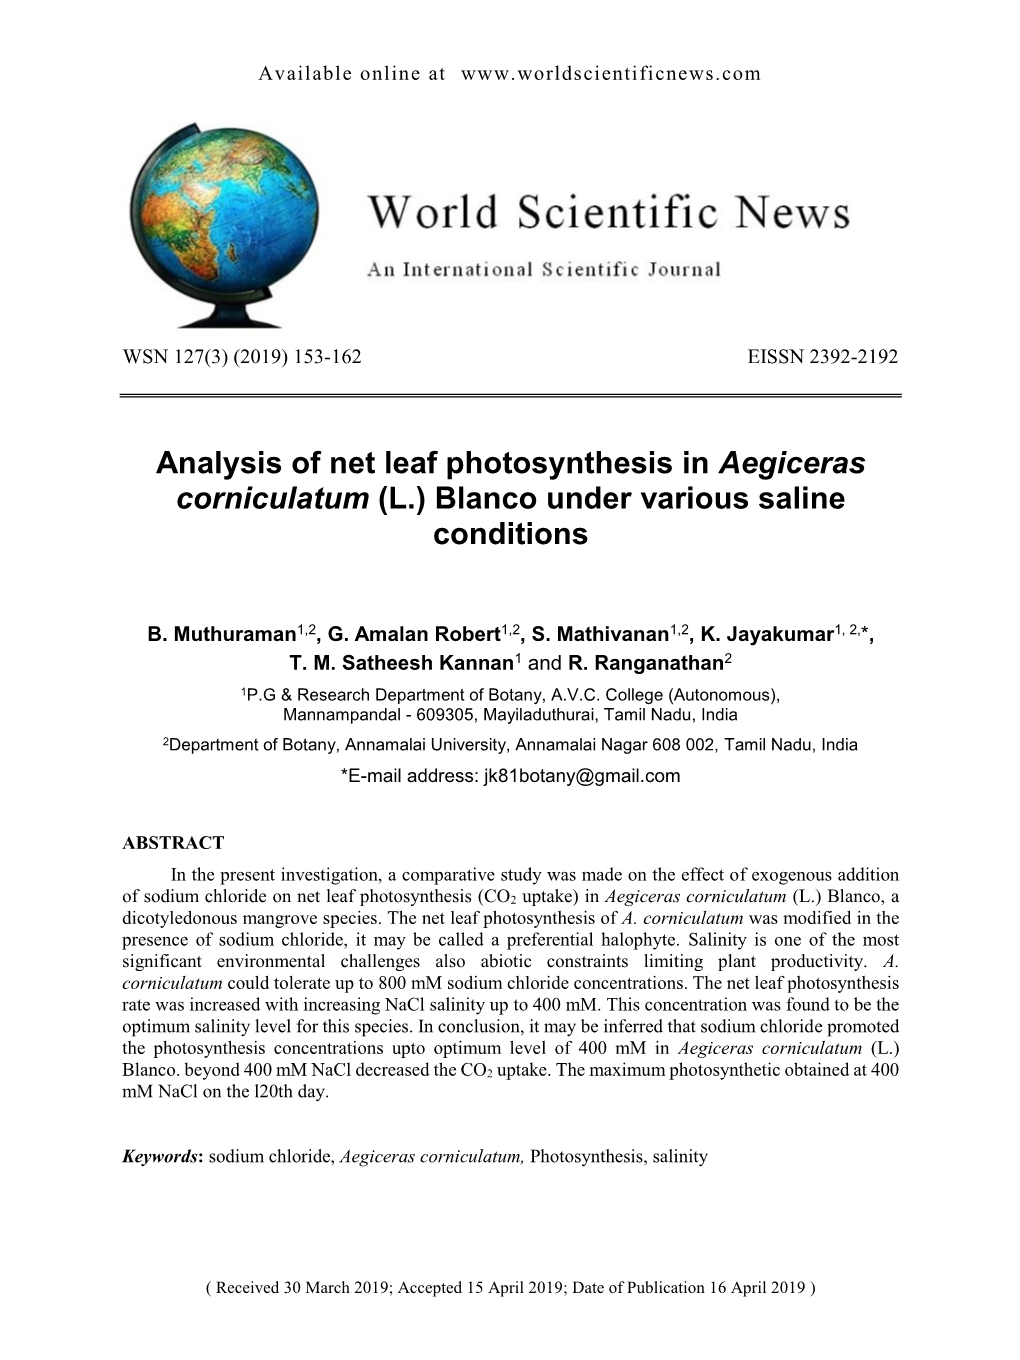 Analysis of Net Leaf Photosynthesis in Aegiceras Corniculatum (L.) Blanco Under Various Saline Conditions